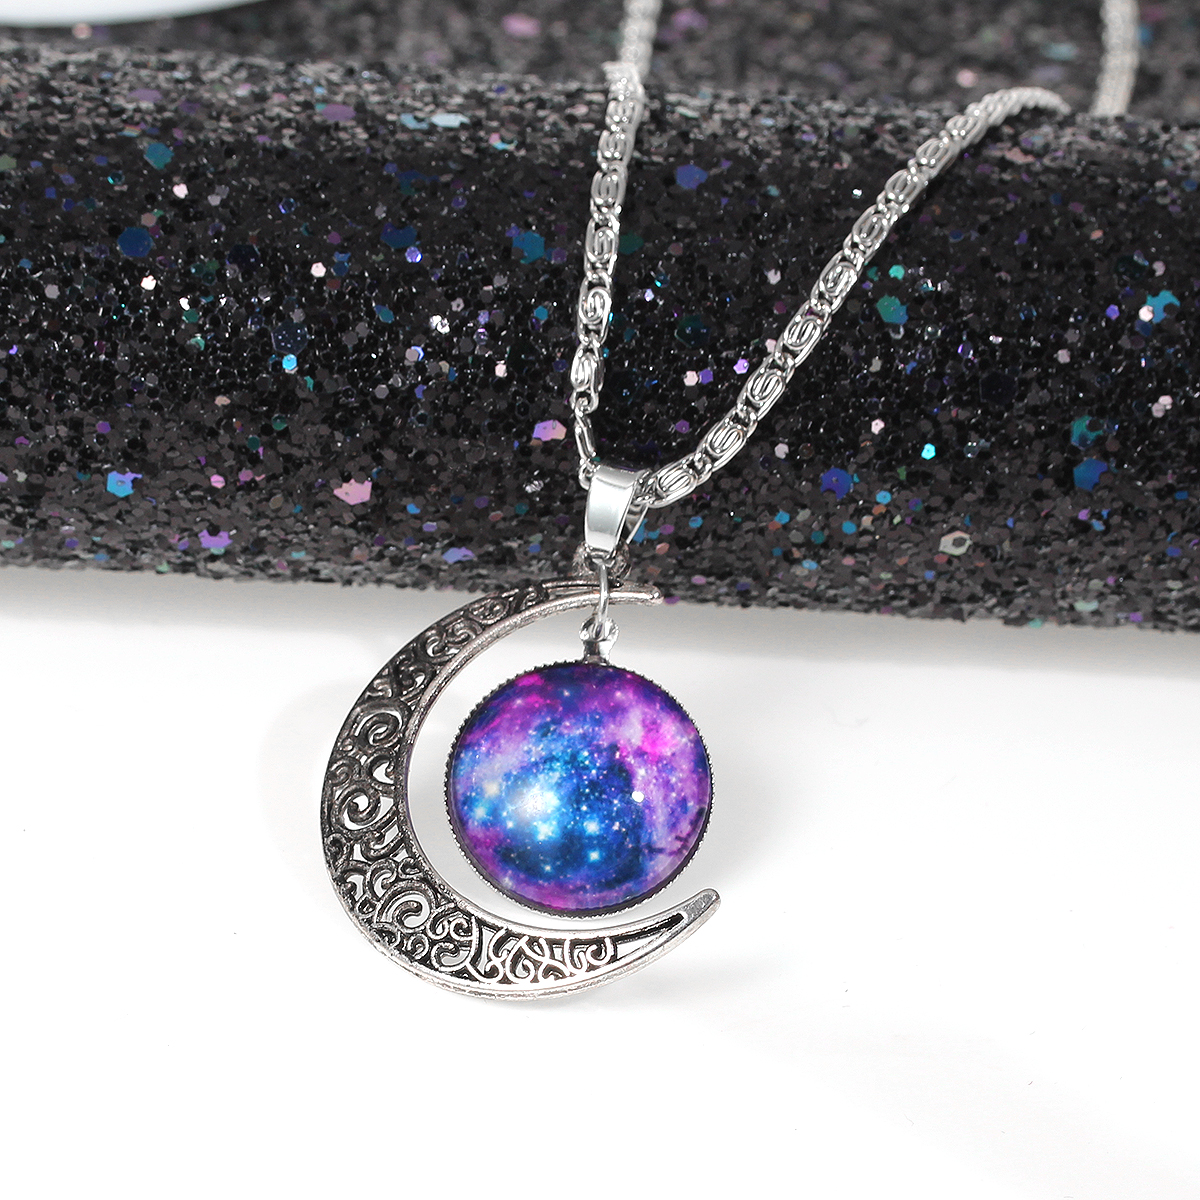 Picture of New Fashion Galaxy Universe Crescent Moon Glass Cabochon Pendant Necklace Scroll Chain Silver Tone Multicolor 47.0cm(18 4/8") long, 1 Piece